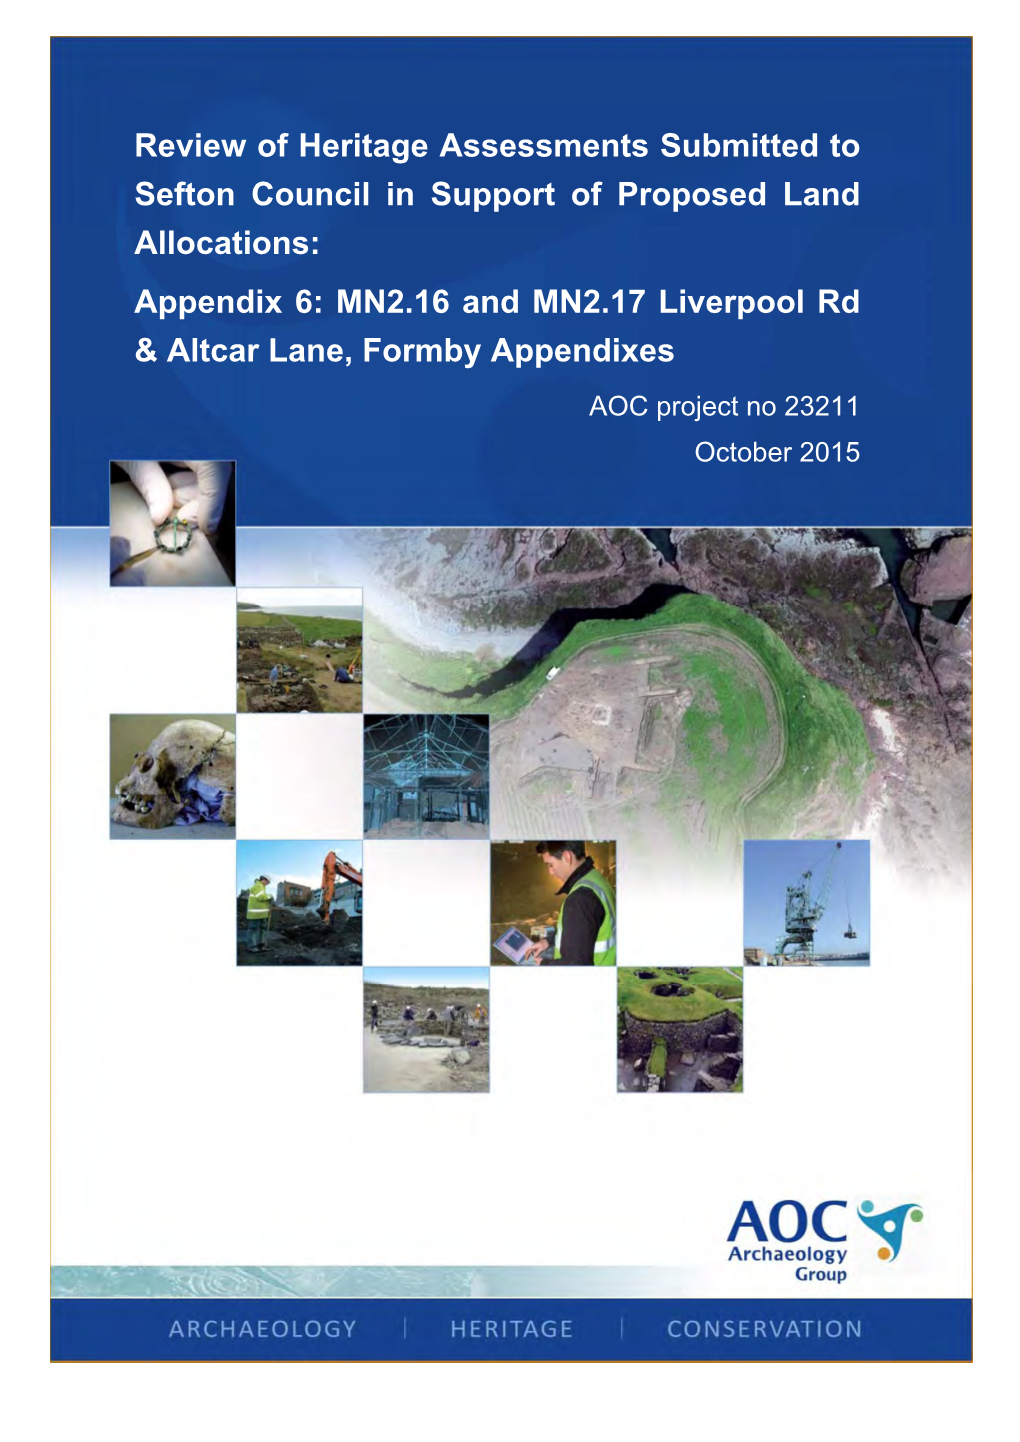 Appendix 6: MN2.16 and MN2.17 Liverpool Rd & Altcar Lane, Formby Appendixes AOC Project No 23211 October 2015